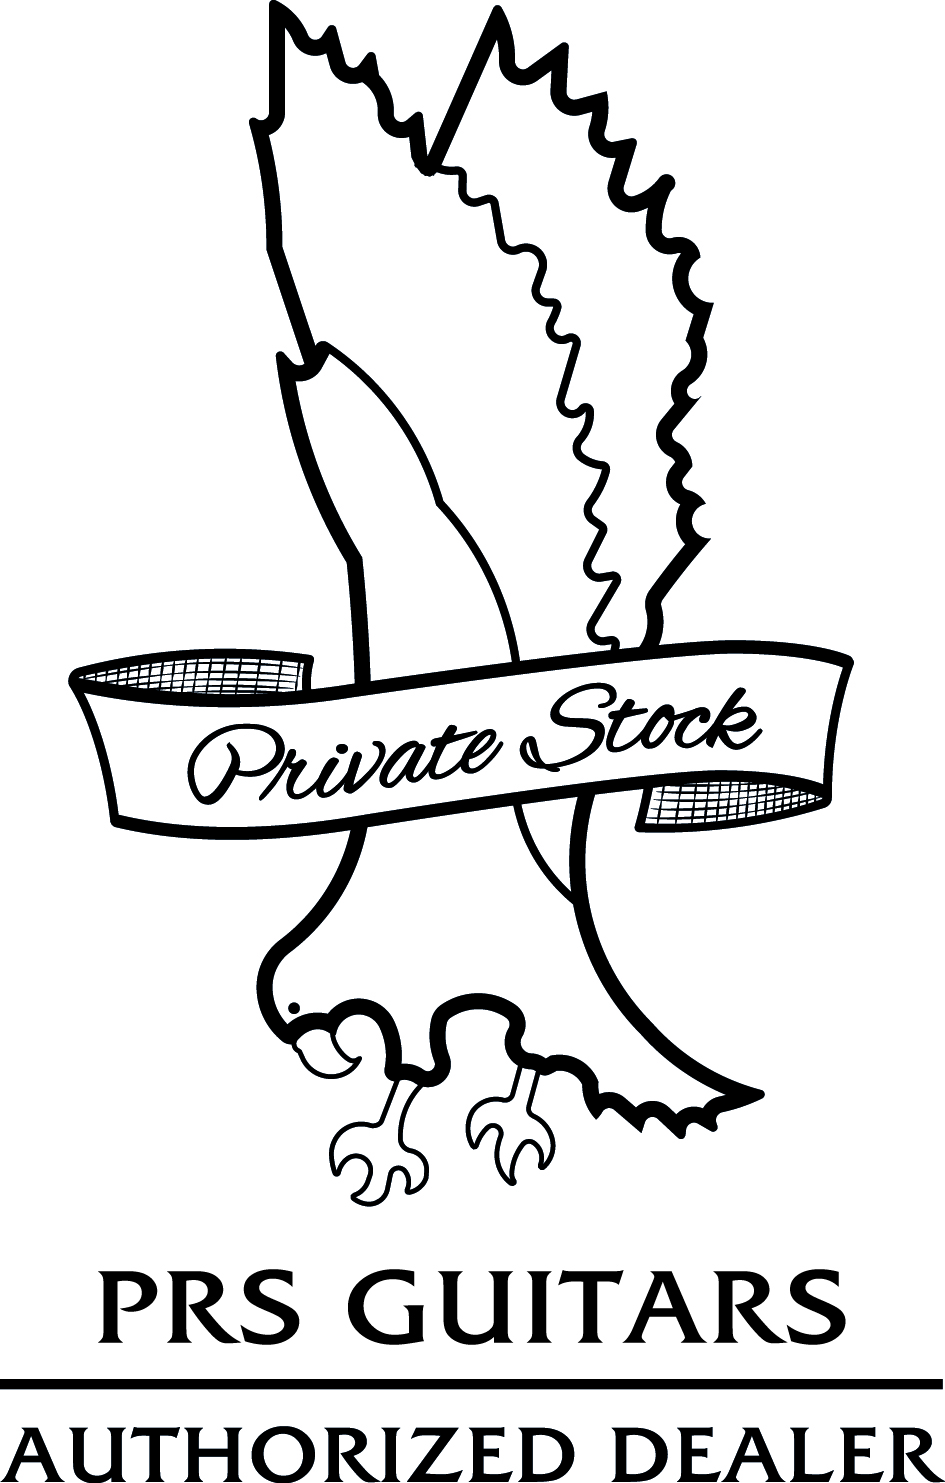 privatestock-authorizeddealerlogo.jpg